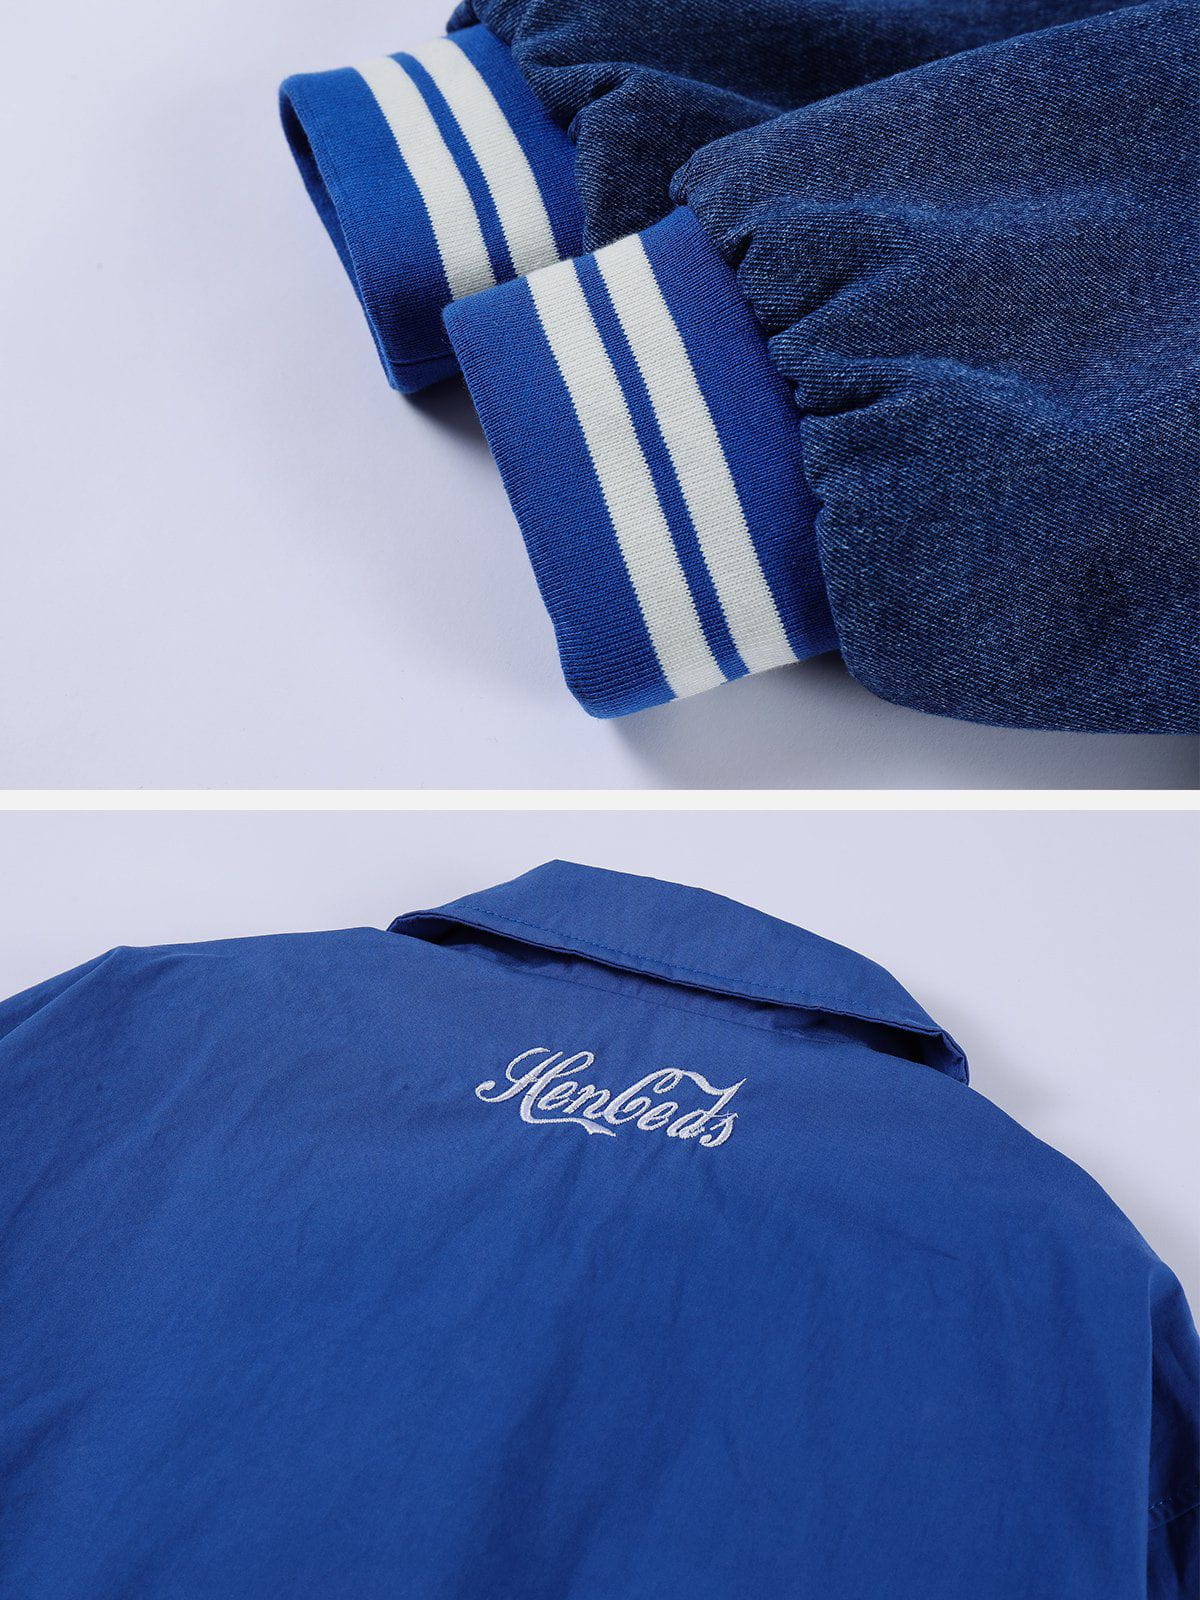 Majesda® - Paneled Loose Embroidered Jacket outfit ideas, streetwear fashion - majesda.com